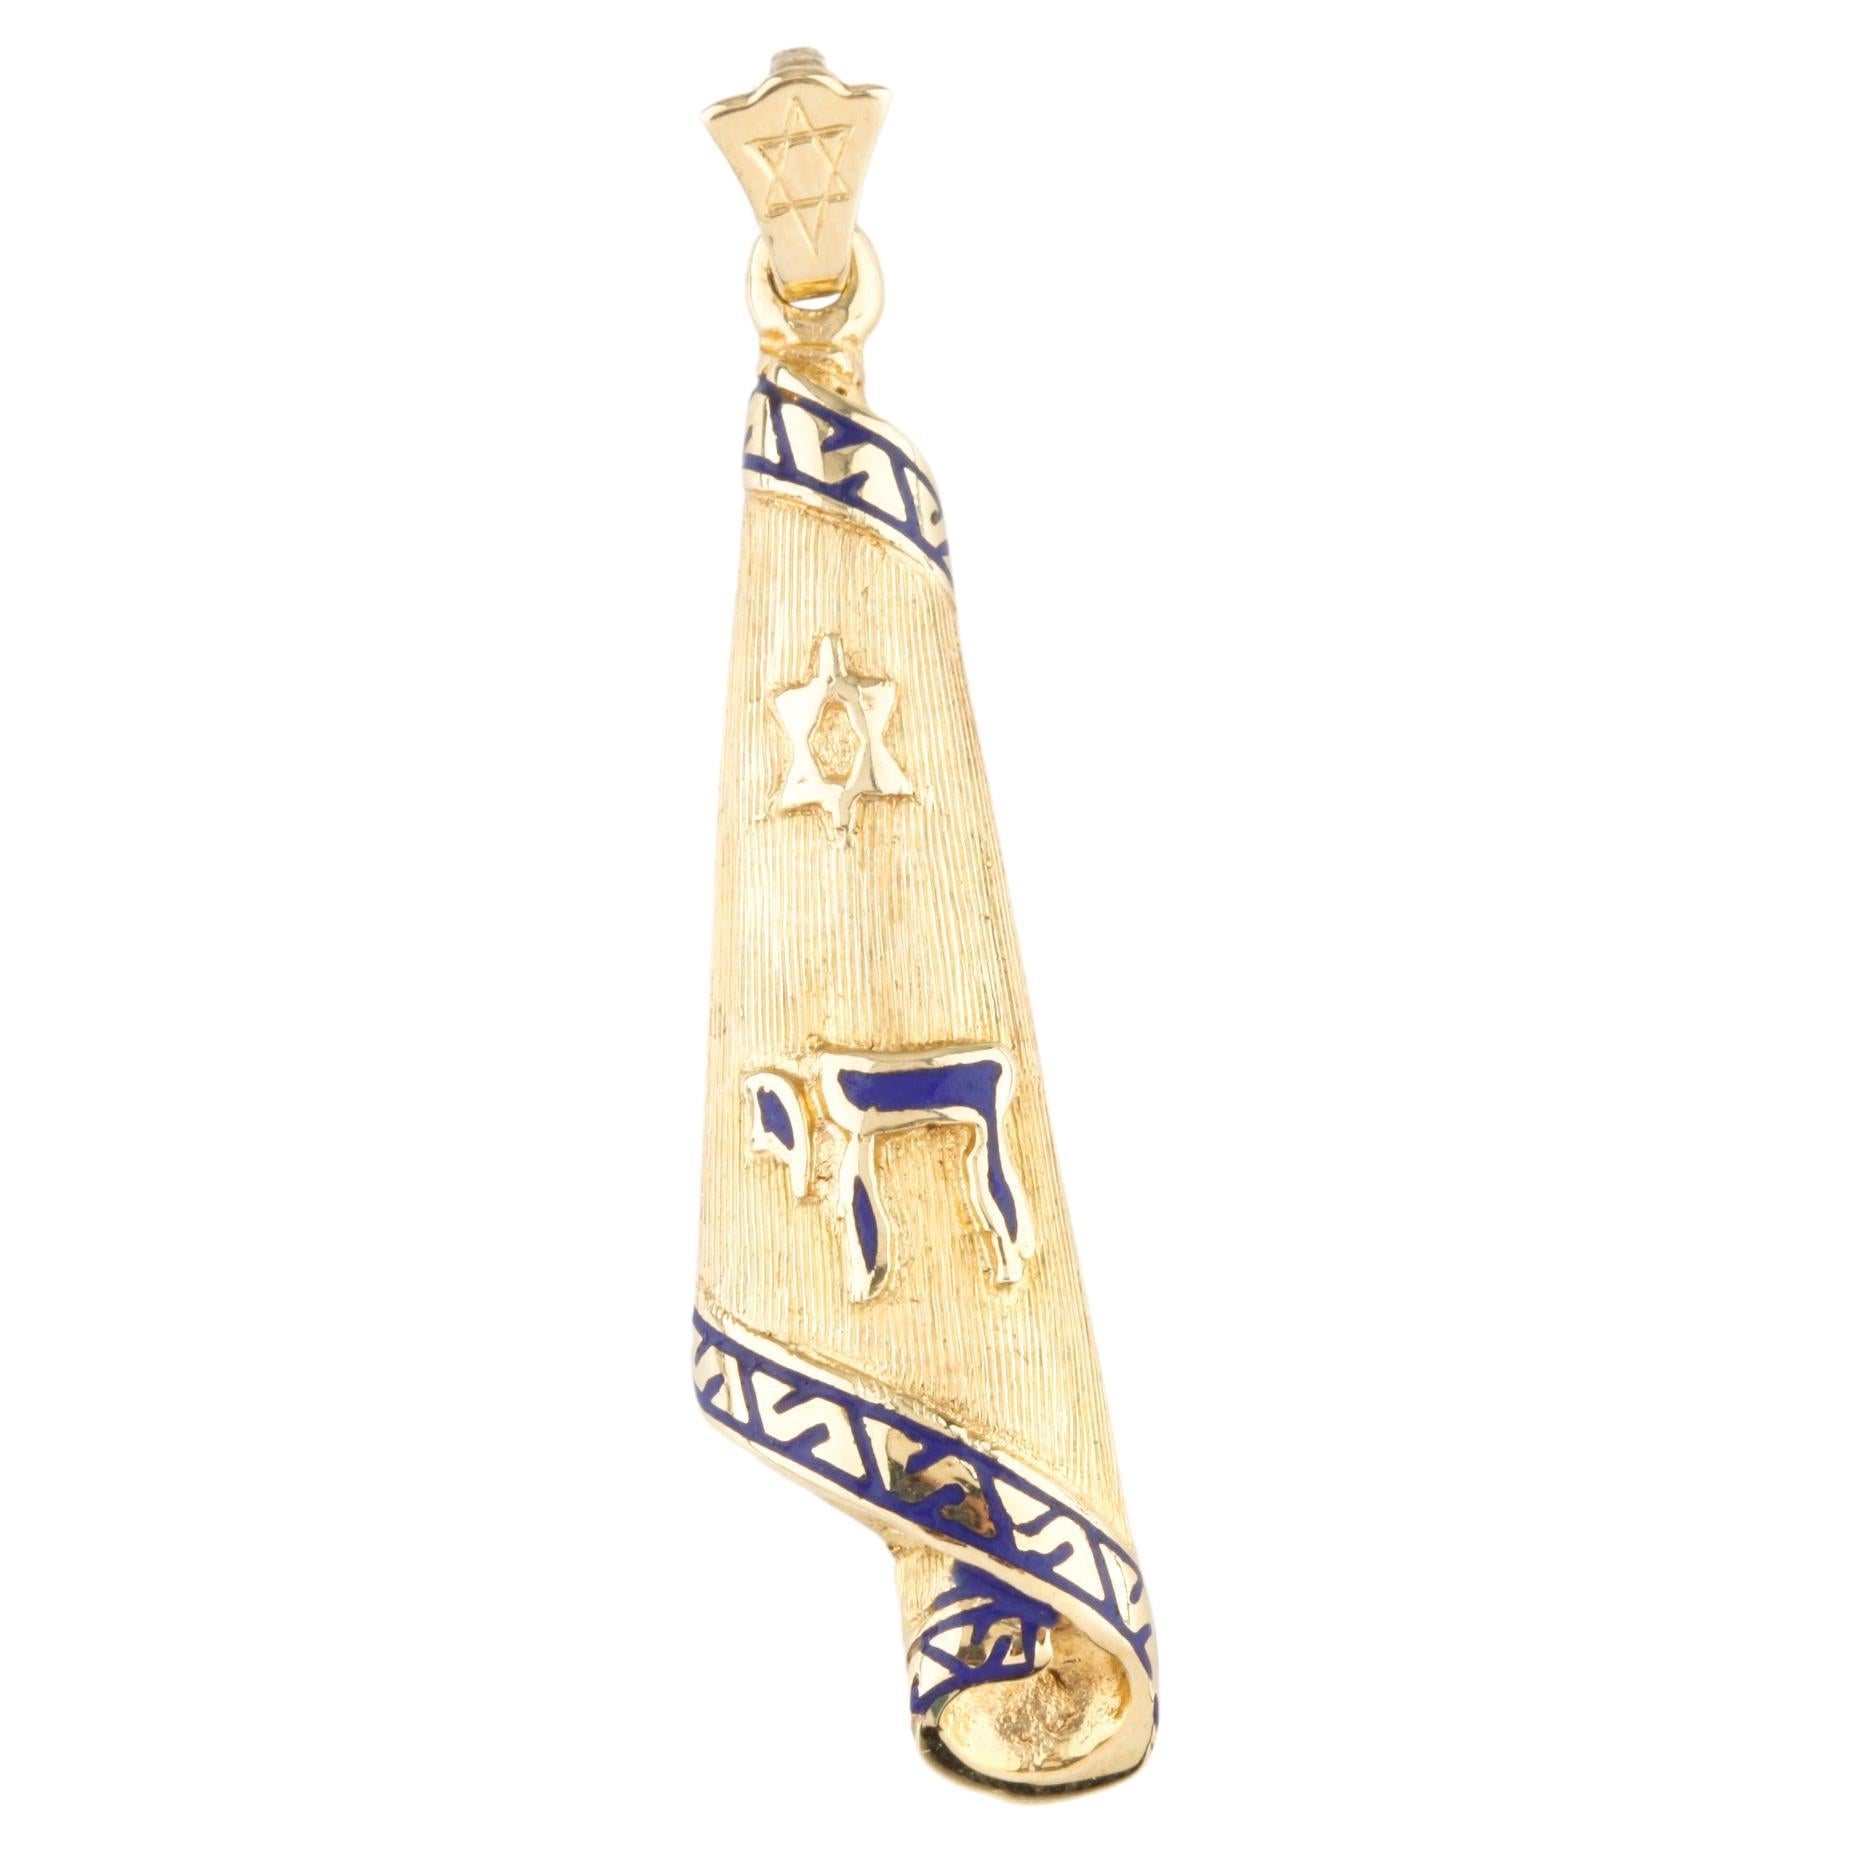 14k Yellow Gold Jewish Chai Scroll Pendant with Blue Enamel Detailing Gorgeous